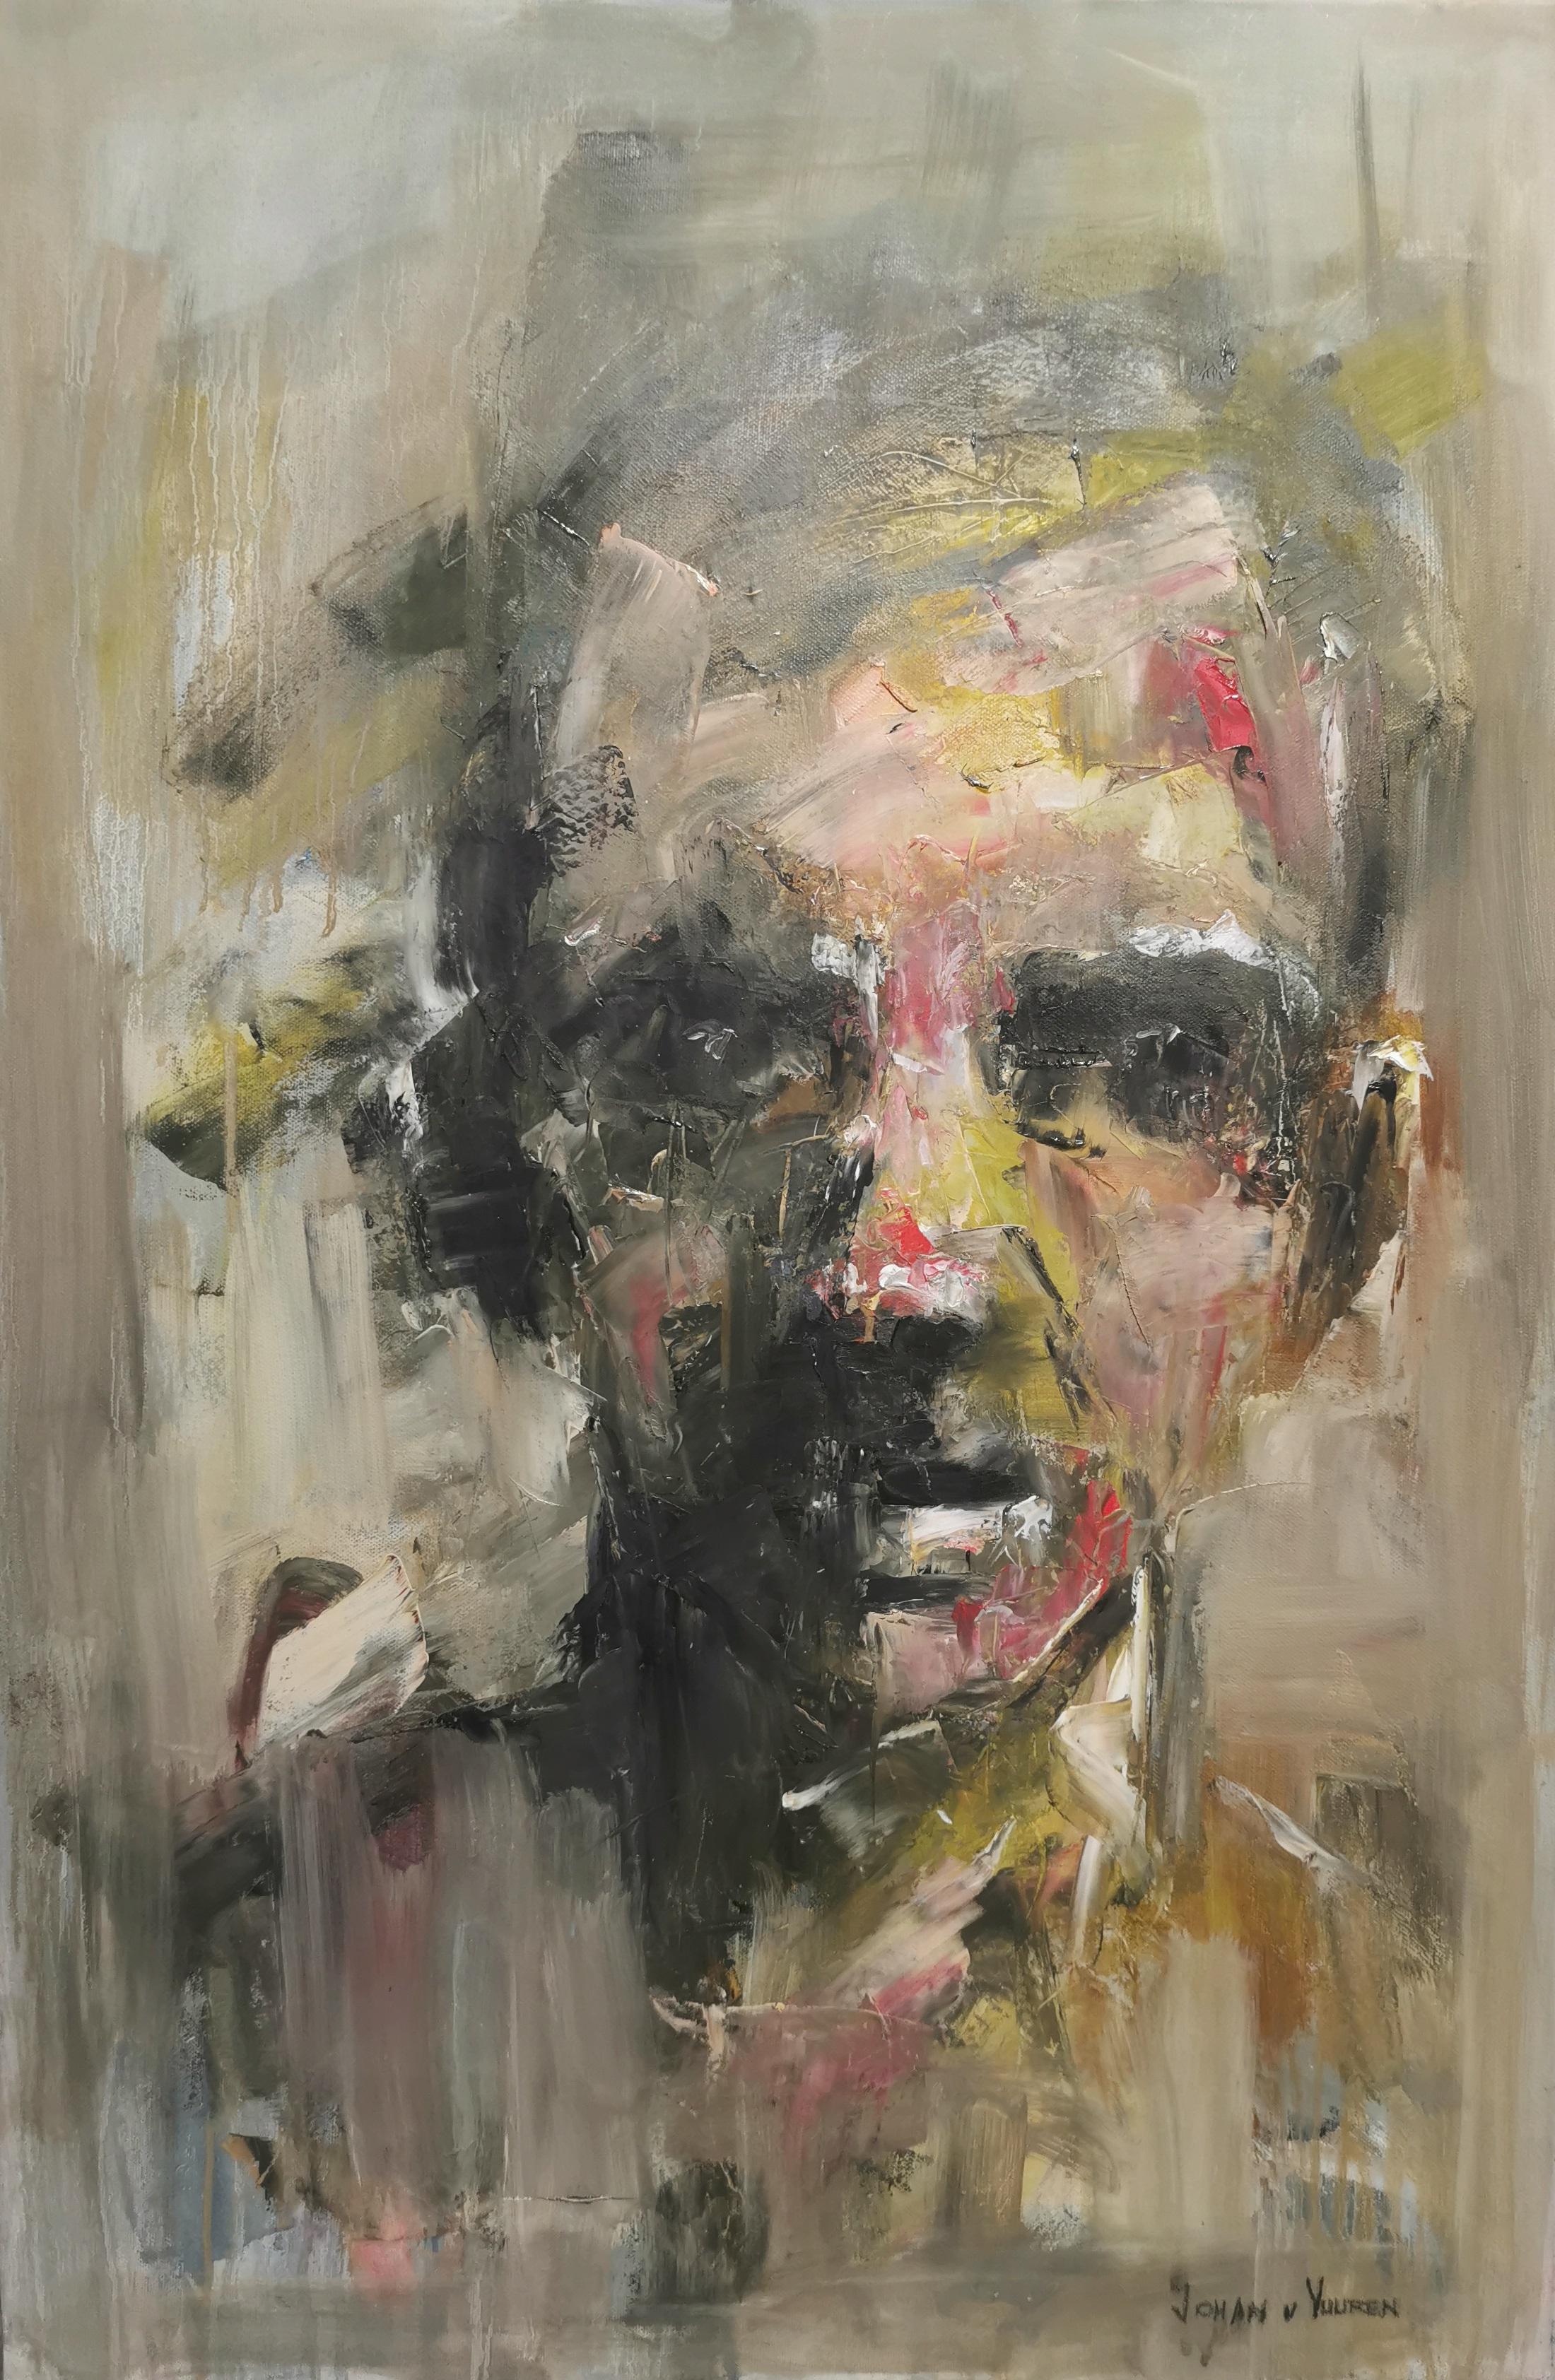 Johan van Vuuren Portrait Painting - Oil on Canvas Gestural Abstracted Expressive Portrait 